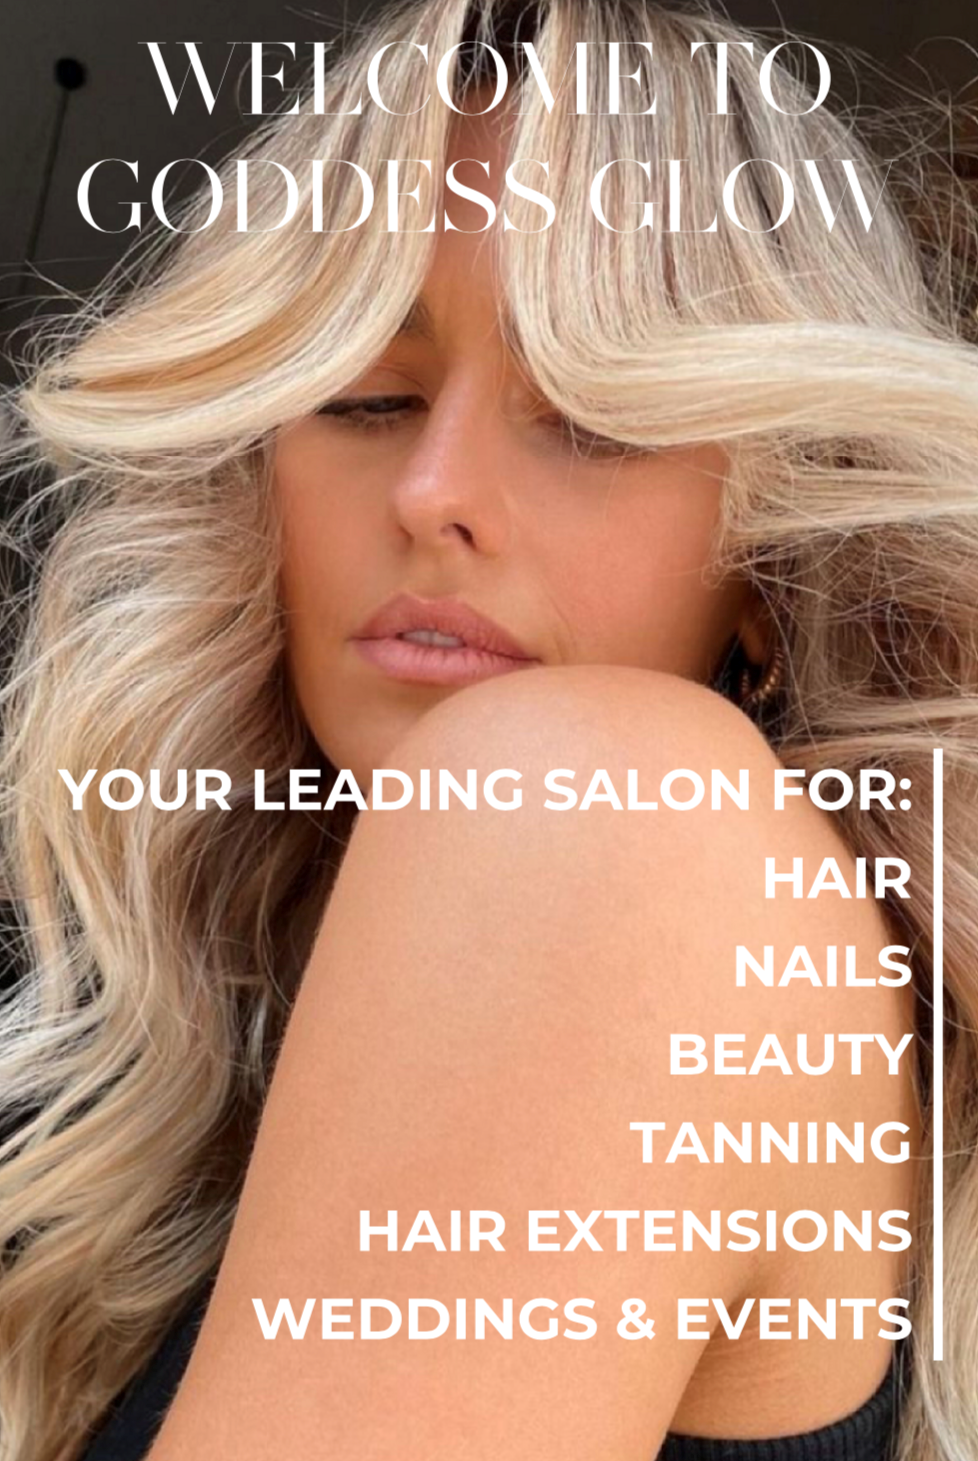 Goddess Glow Hair Salon - Beautiful hair in luxury surroundings